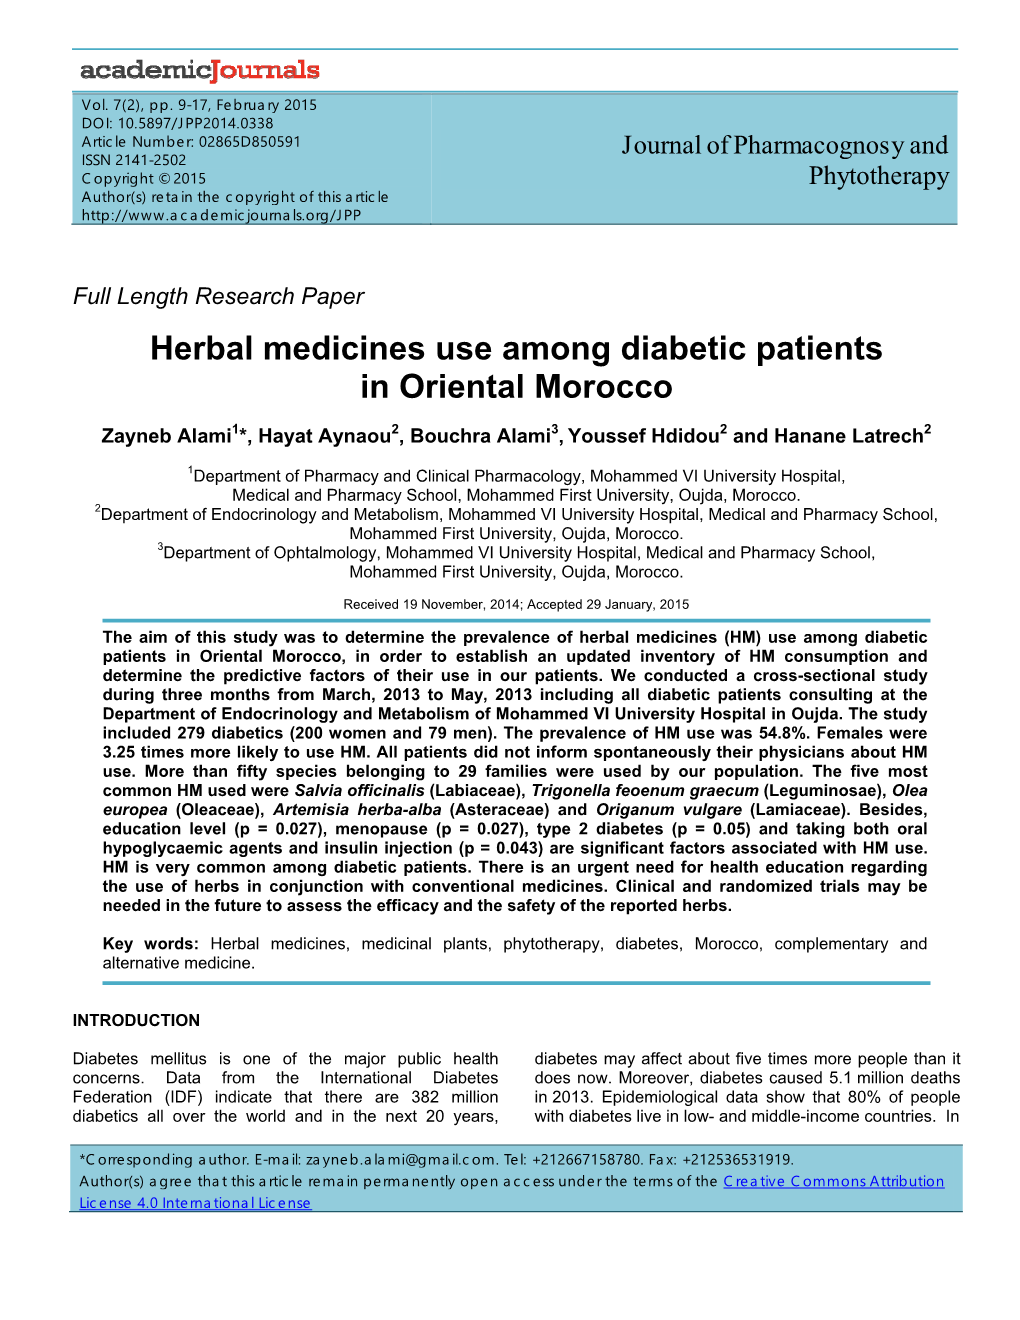 Herbal Medicines Use Among Diabetic Patients in Oriental Morocco